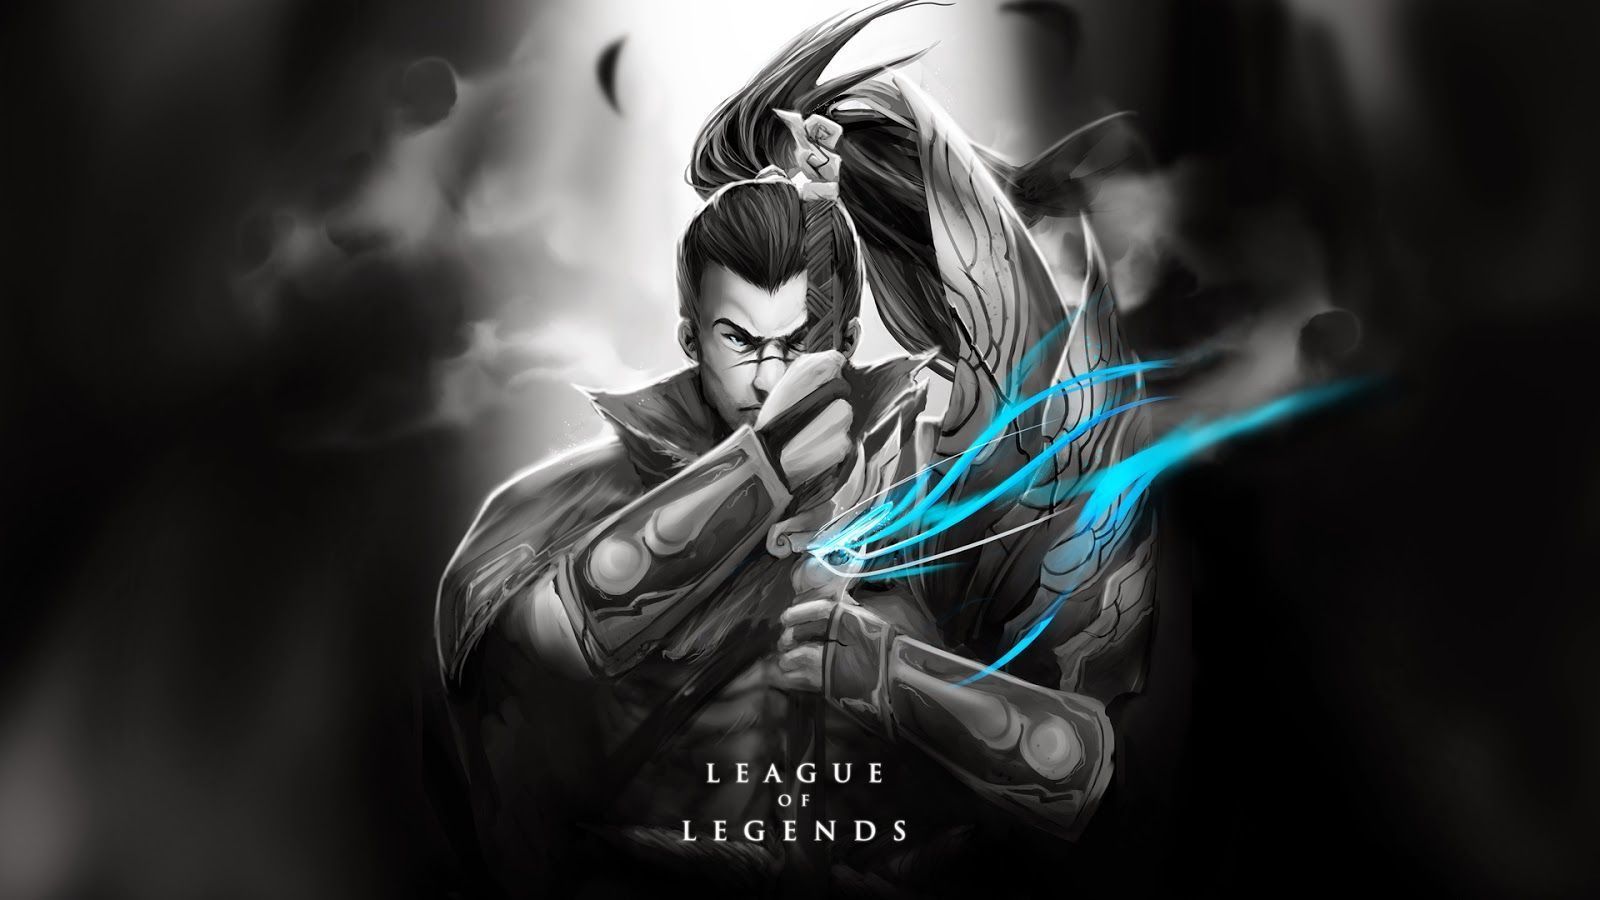 Yasuo League of Legends Wallpaper, Yasuo Desktop Wallpaper